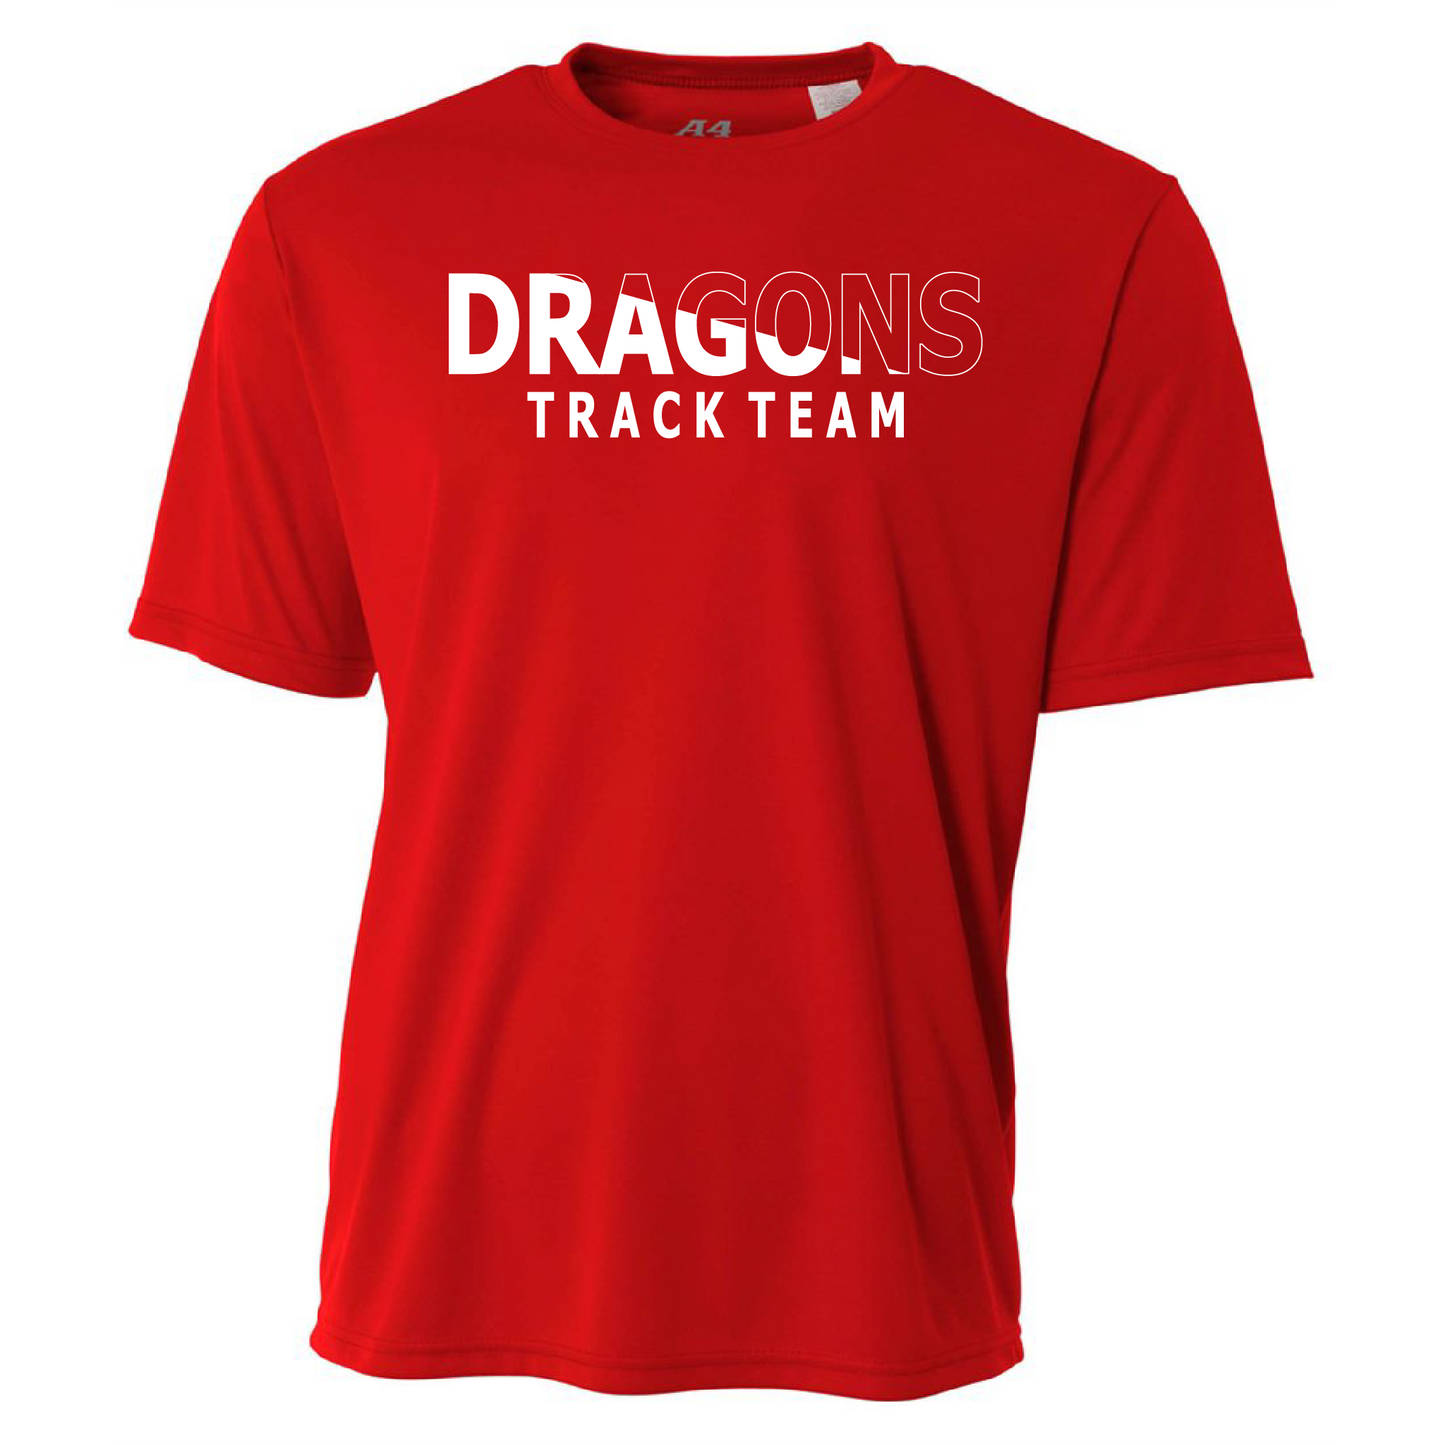 Mens S/S T-Shirt - Dragons Track Team Slashed White